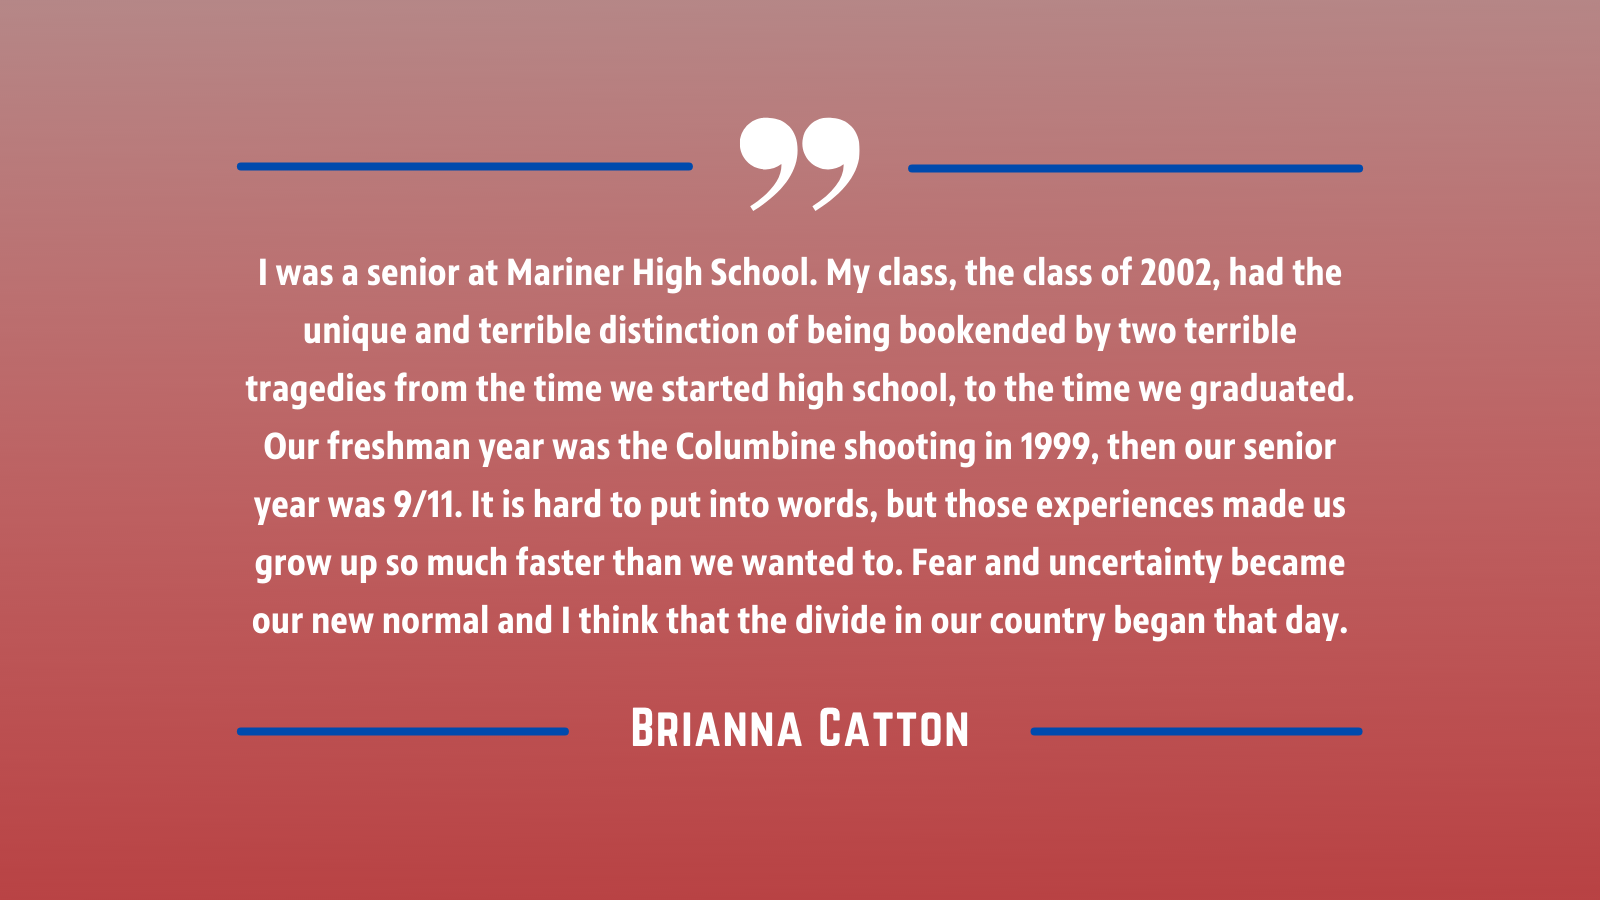 September 11 - Brianna Catton